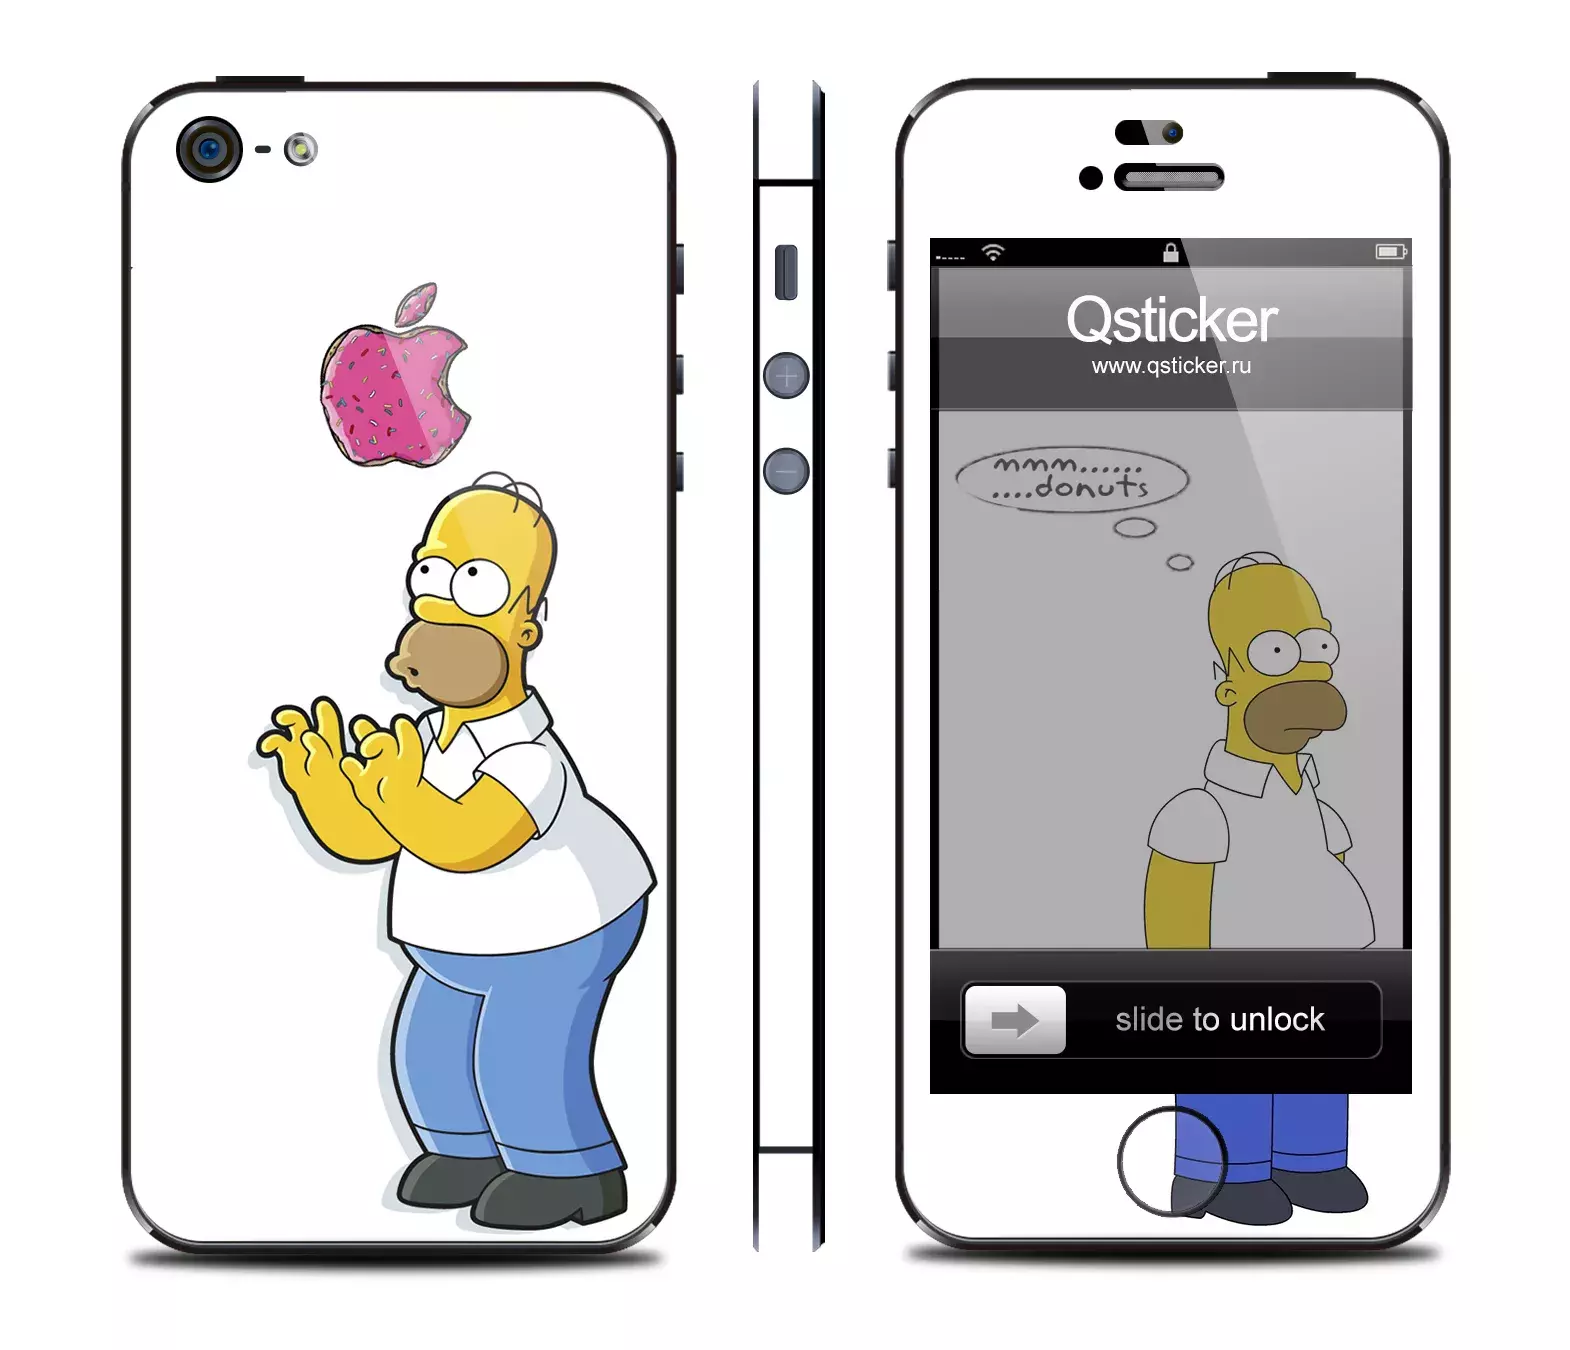 Наклейка Qsticker Simpson Homer на iPhone 5/5S